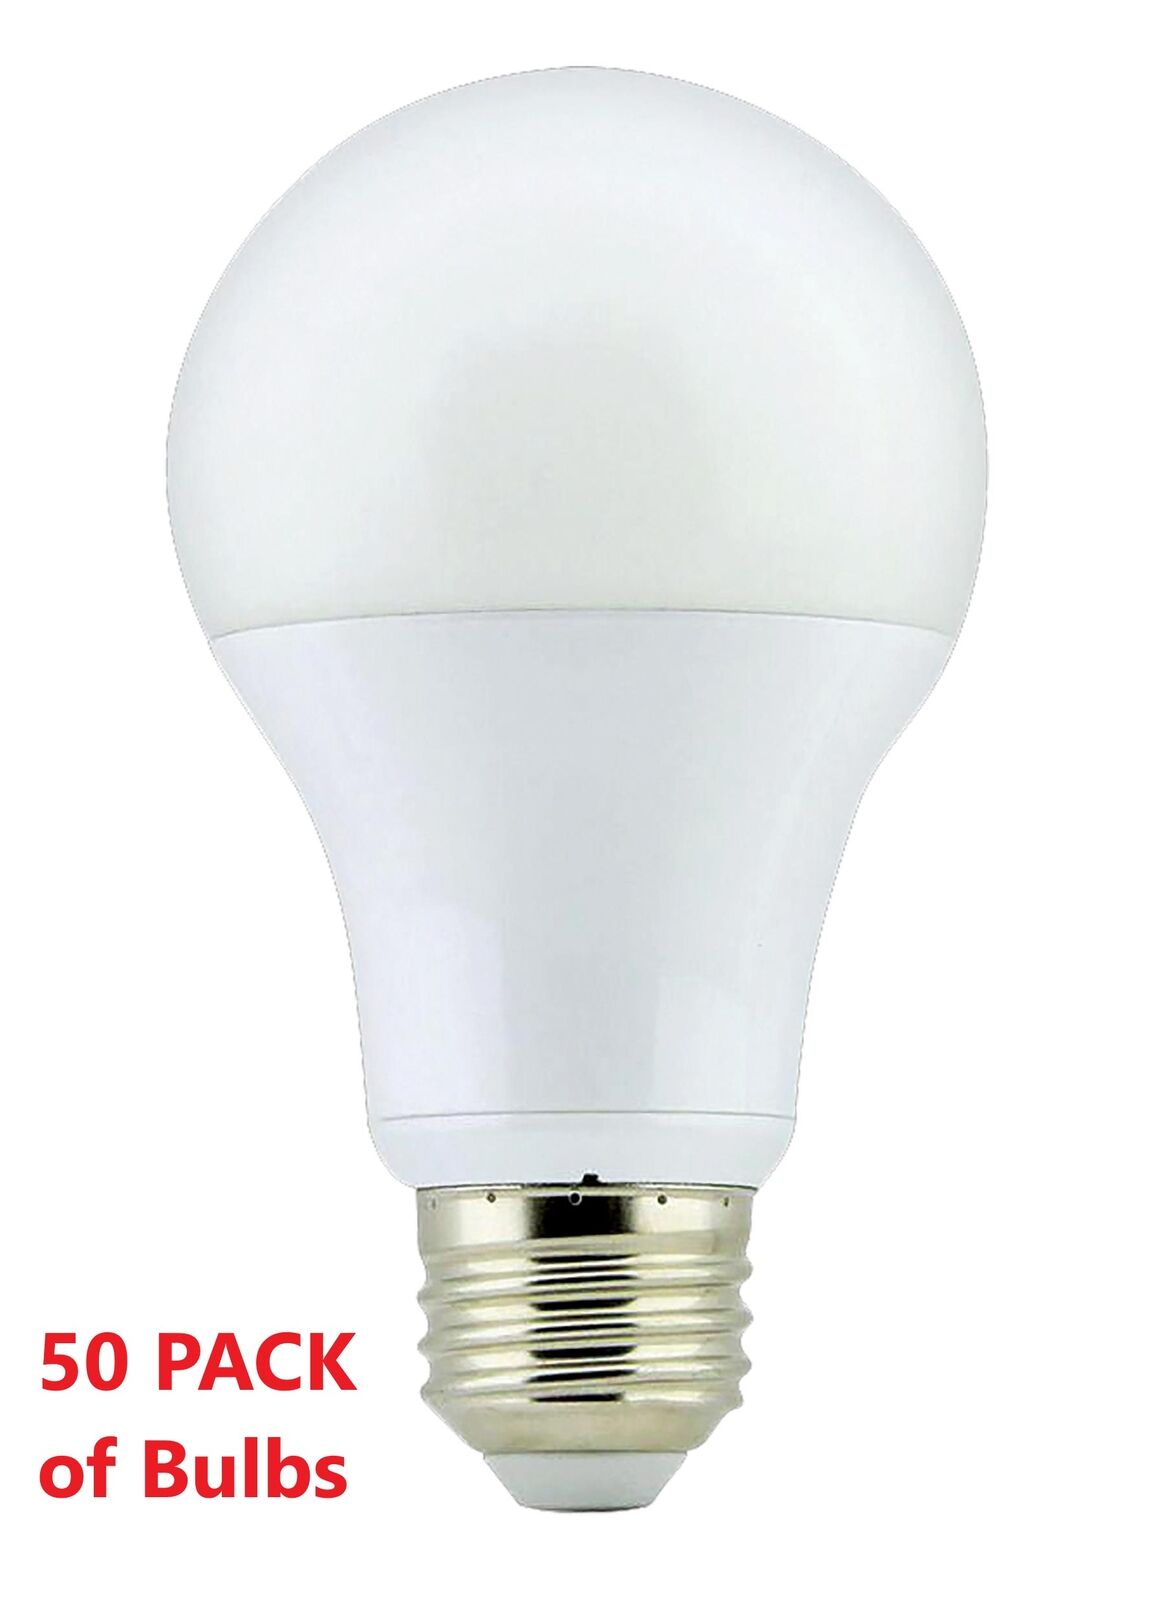 Sea Gull Lighting A19 LED Dimmable Light Bulb 10W Warm White 2700K 50 Pack Lot